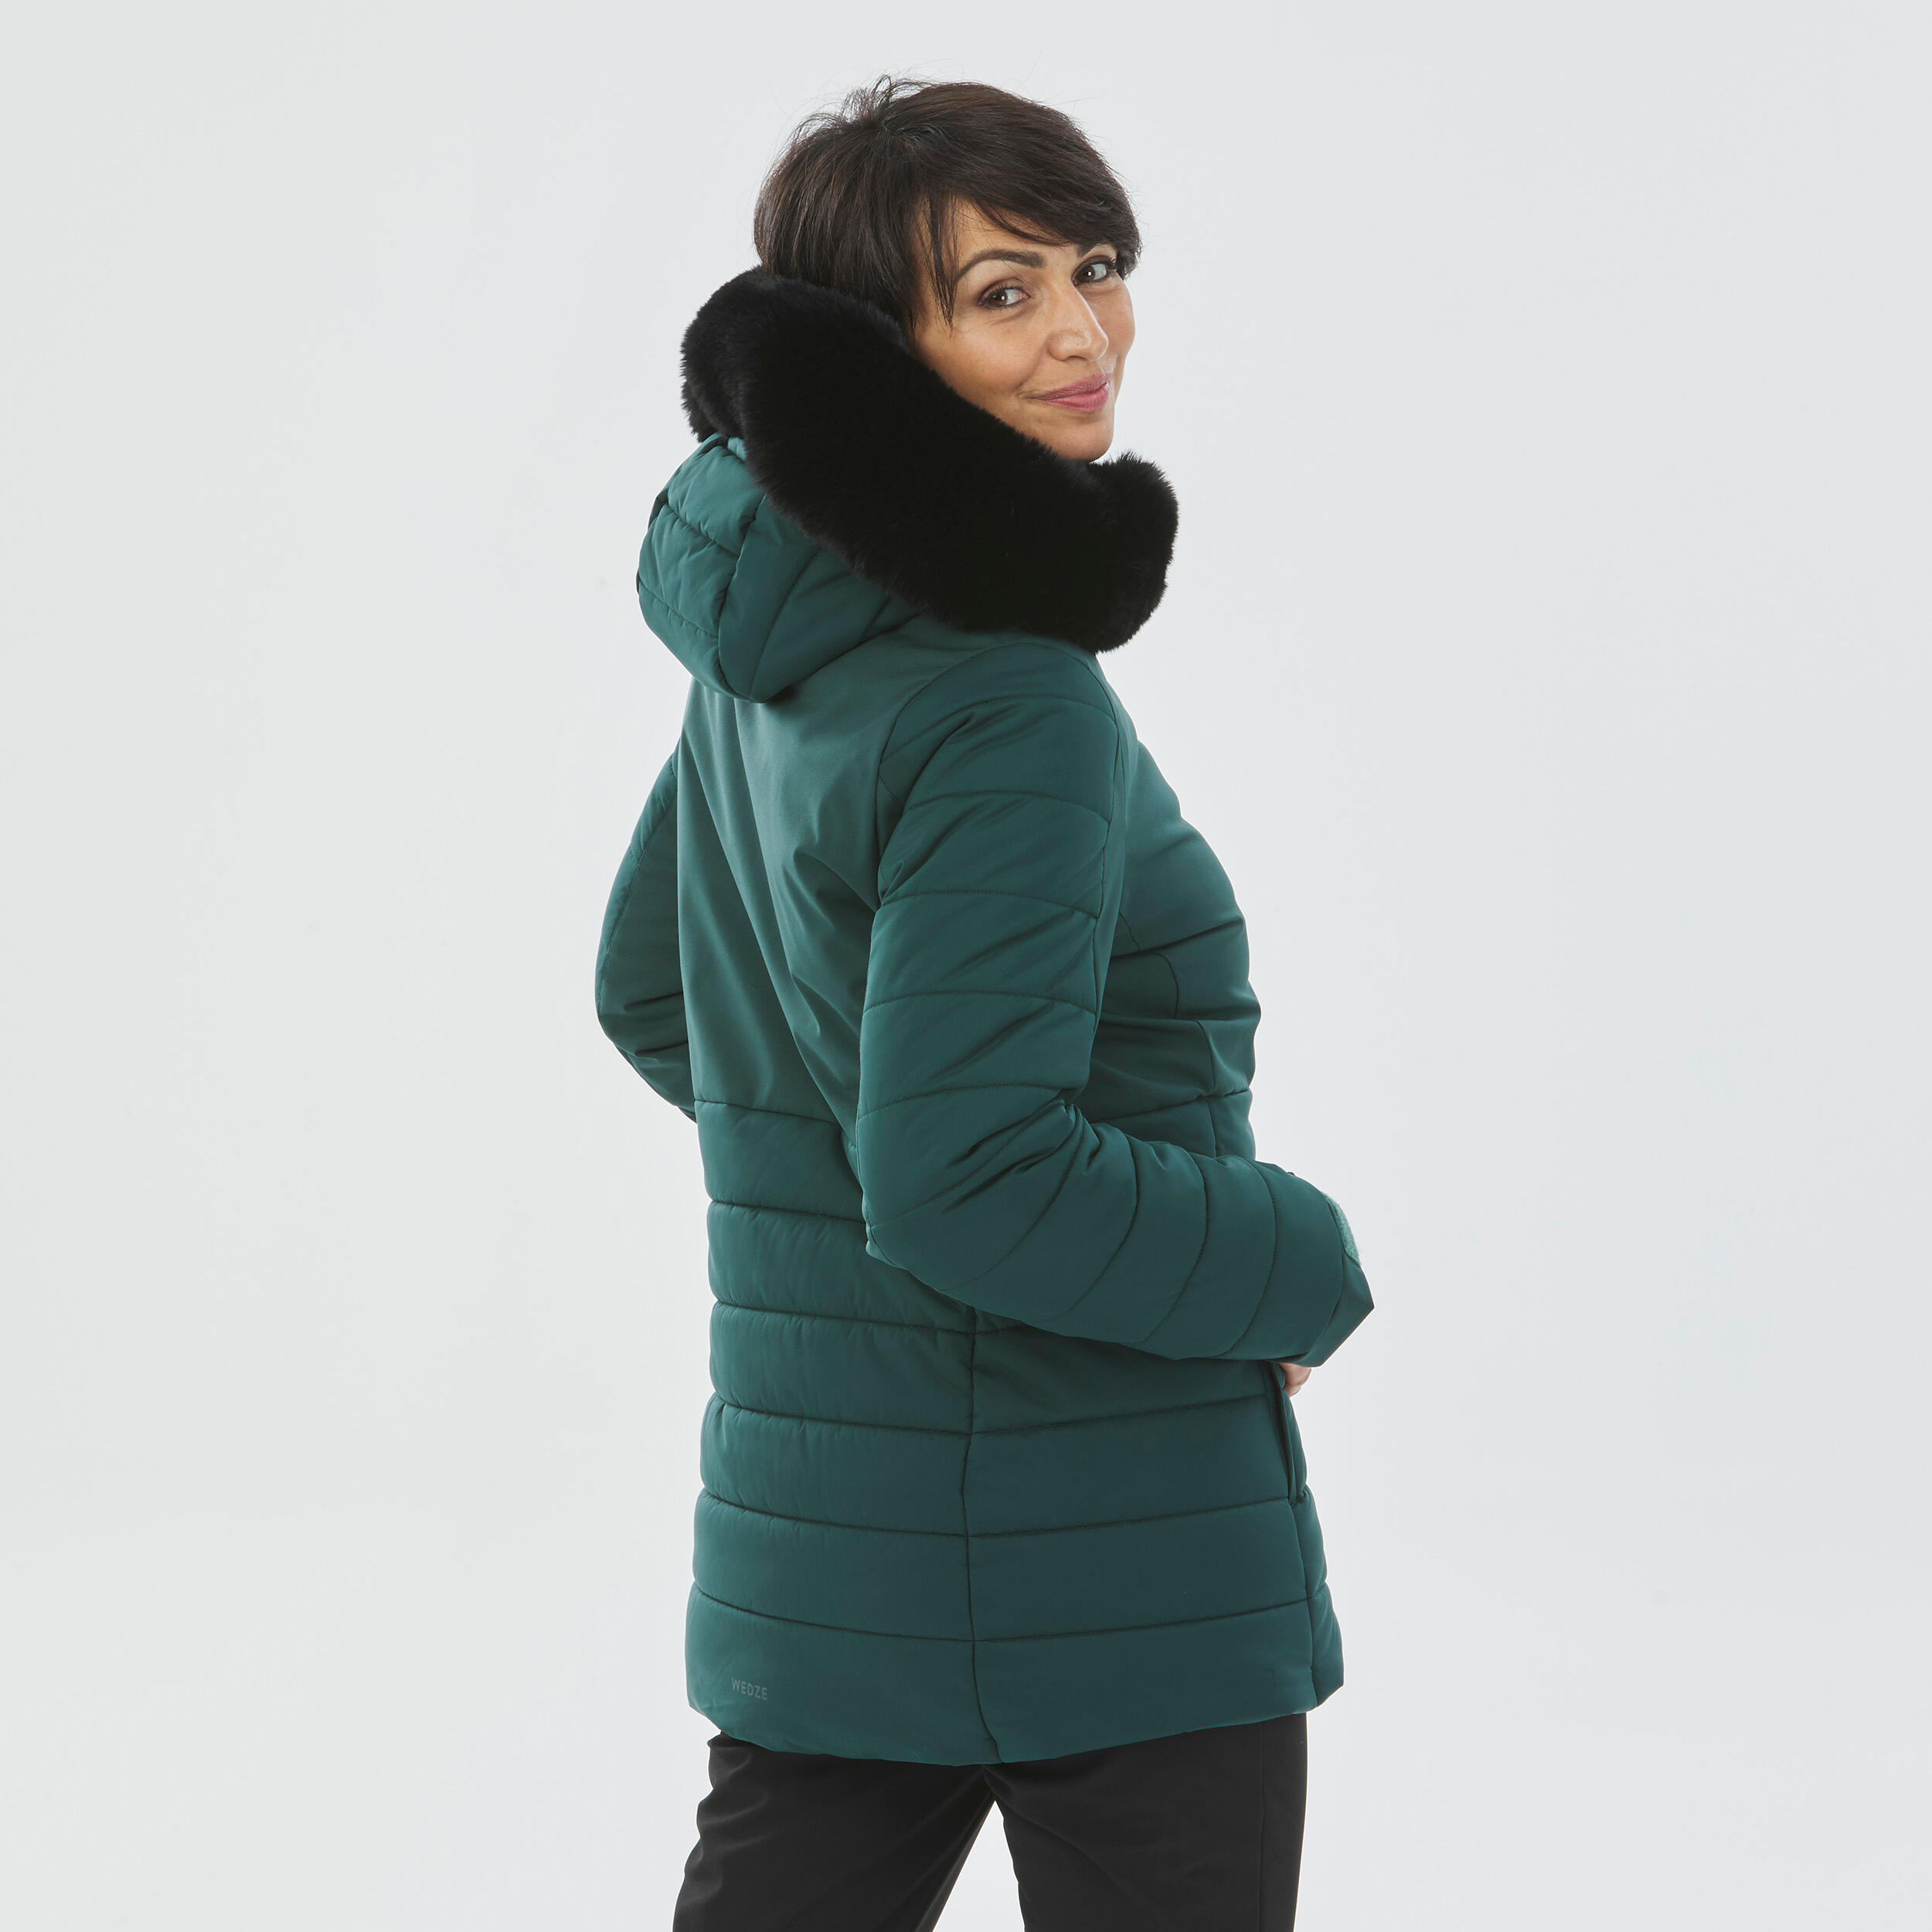 Women's Mid-Length Warm Ski Jacket 100 - Green 5/12